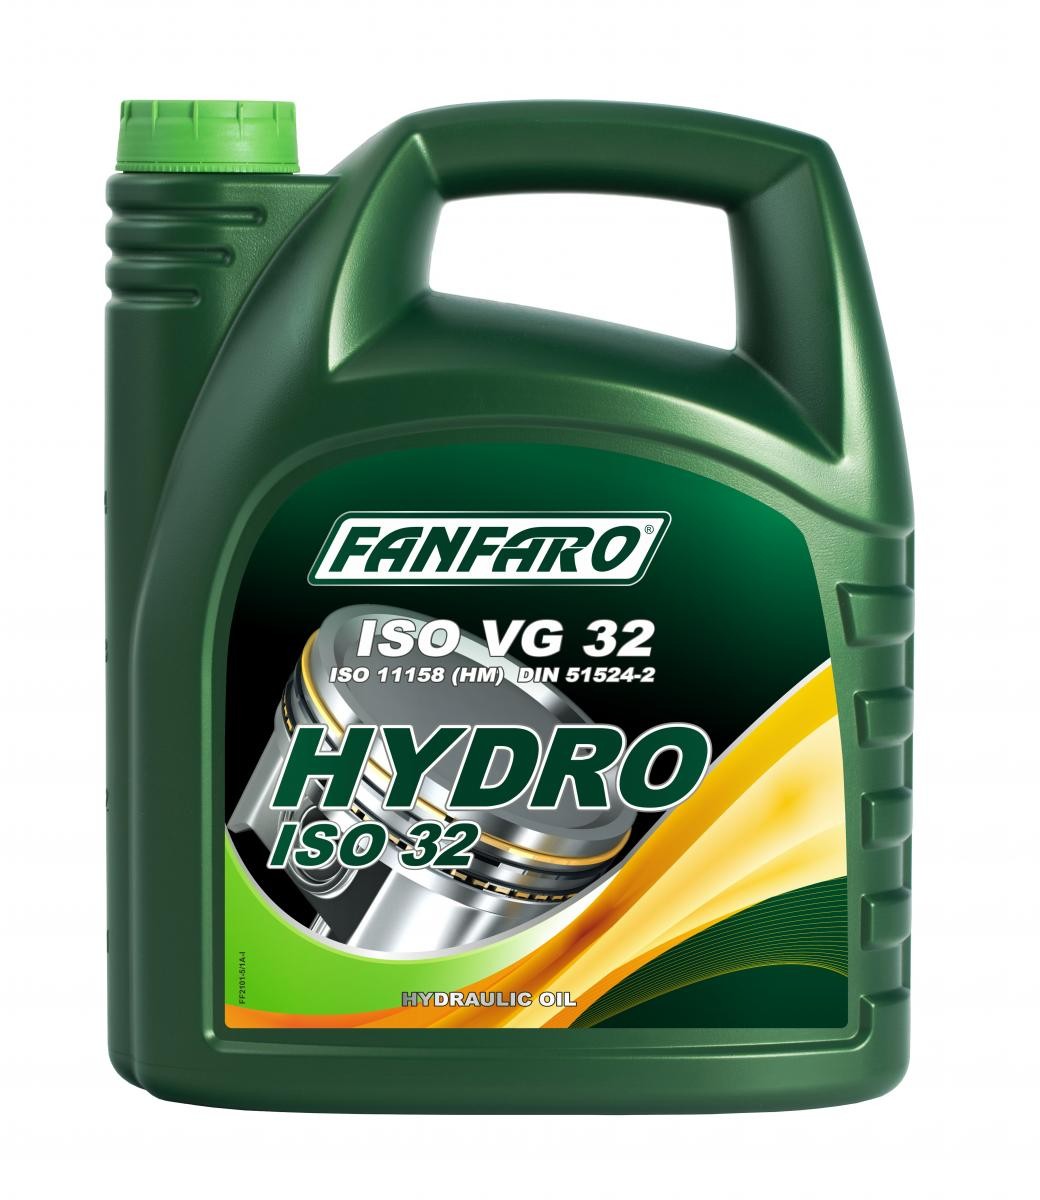 FANFARO Hydro, ISO 32 Capacity: 5l ISO VG 32, DIN 51524-2 HLP, ISO 11158 HM Hydraulic fluid FF2101-5 buy